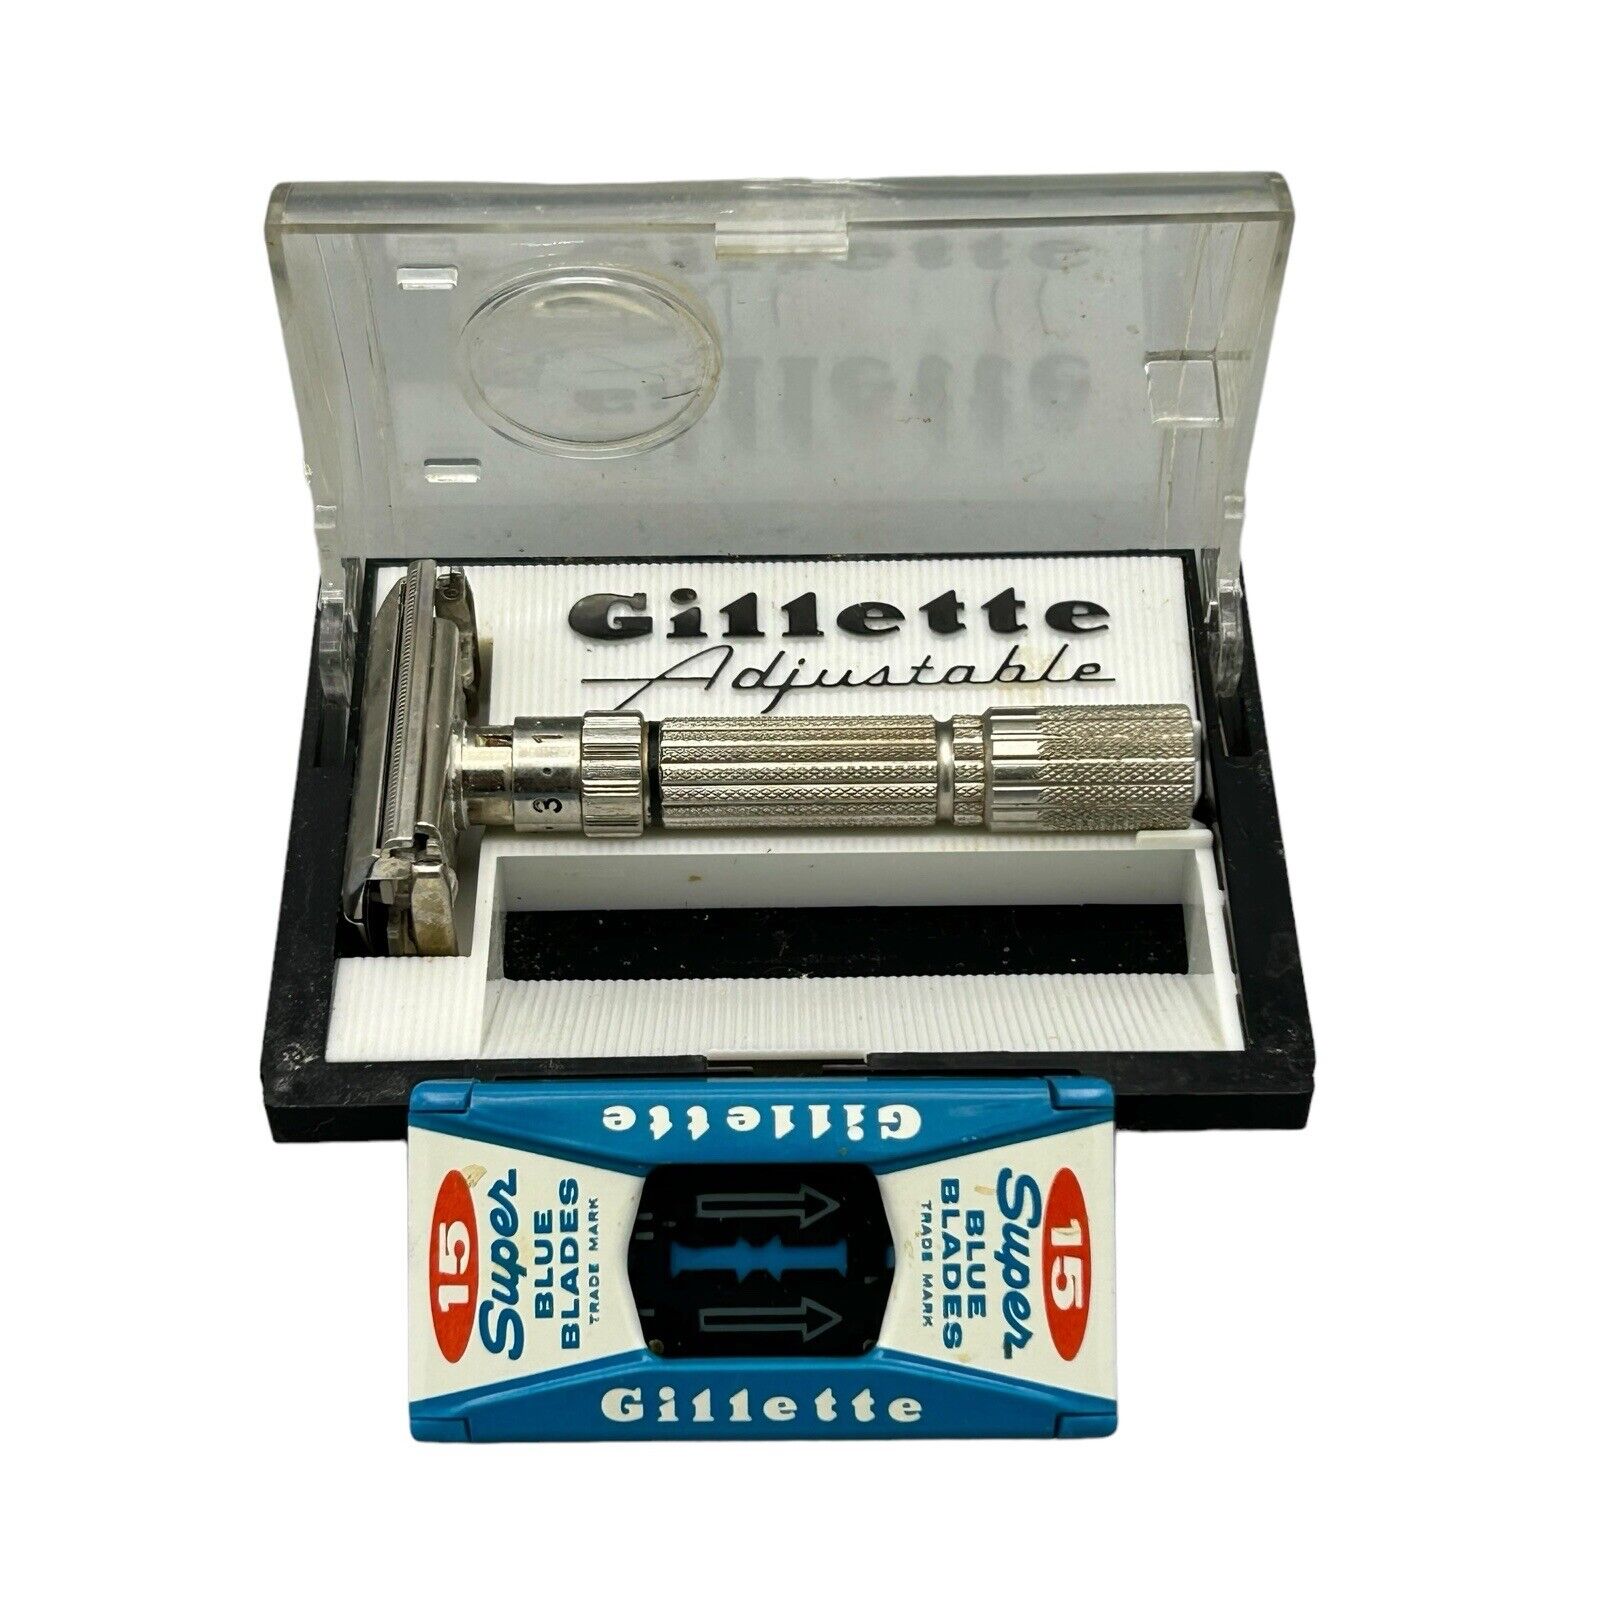 Vintage Gillette Fat Boy Adjustable Safety Razor E2 w/ Razors & Case Ships Quick